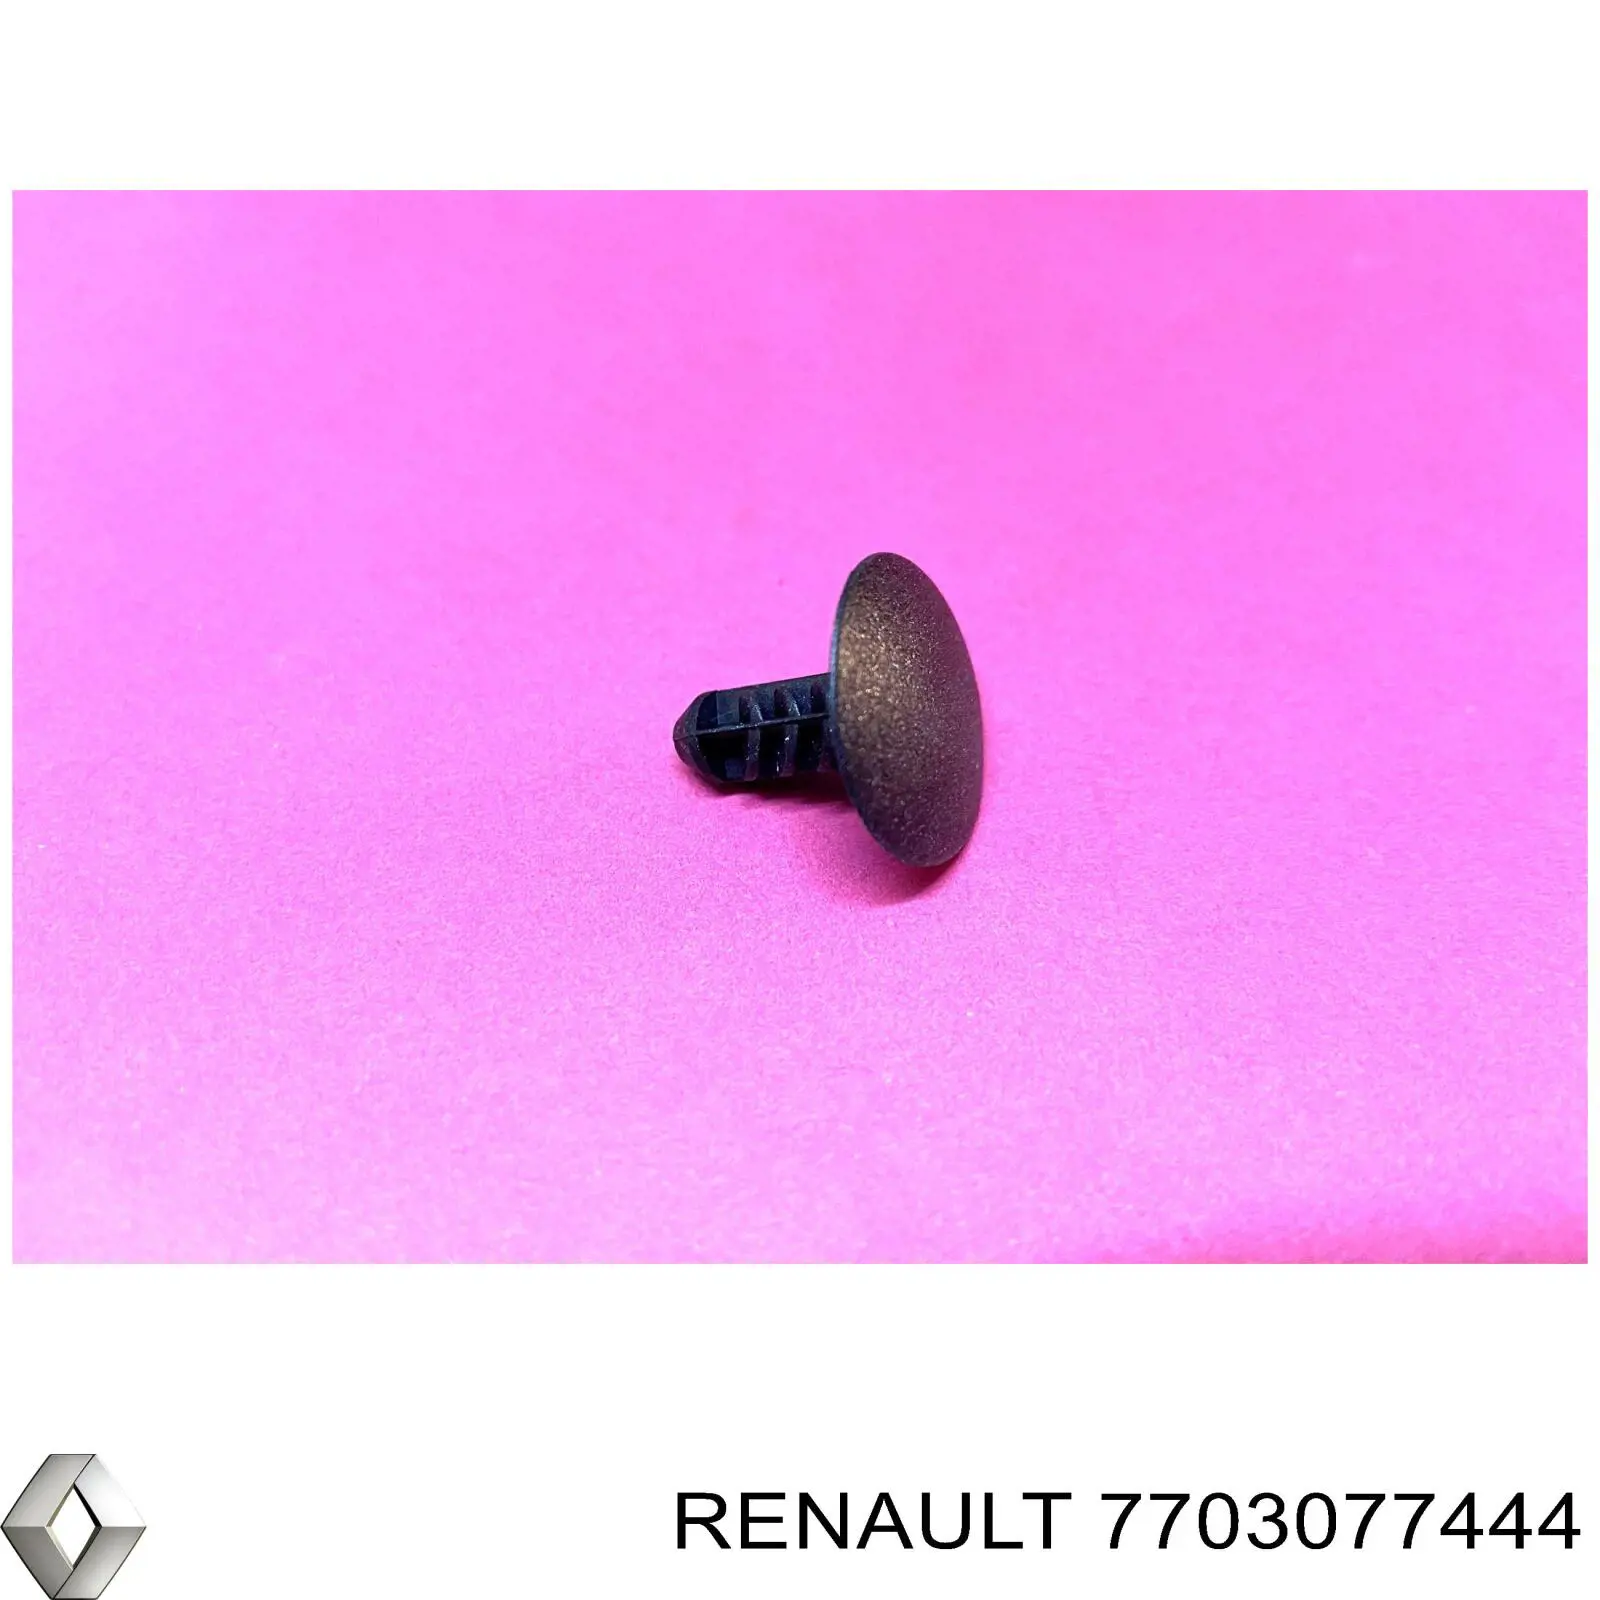 7703077444 Renault (RVI) пистон (клип крепления обшивки двери)